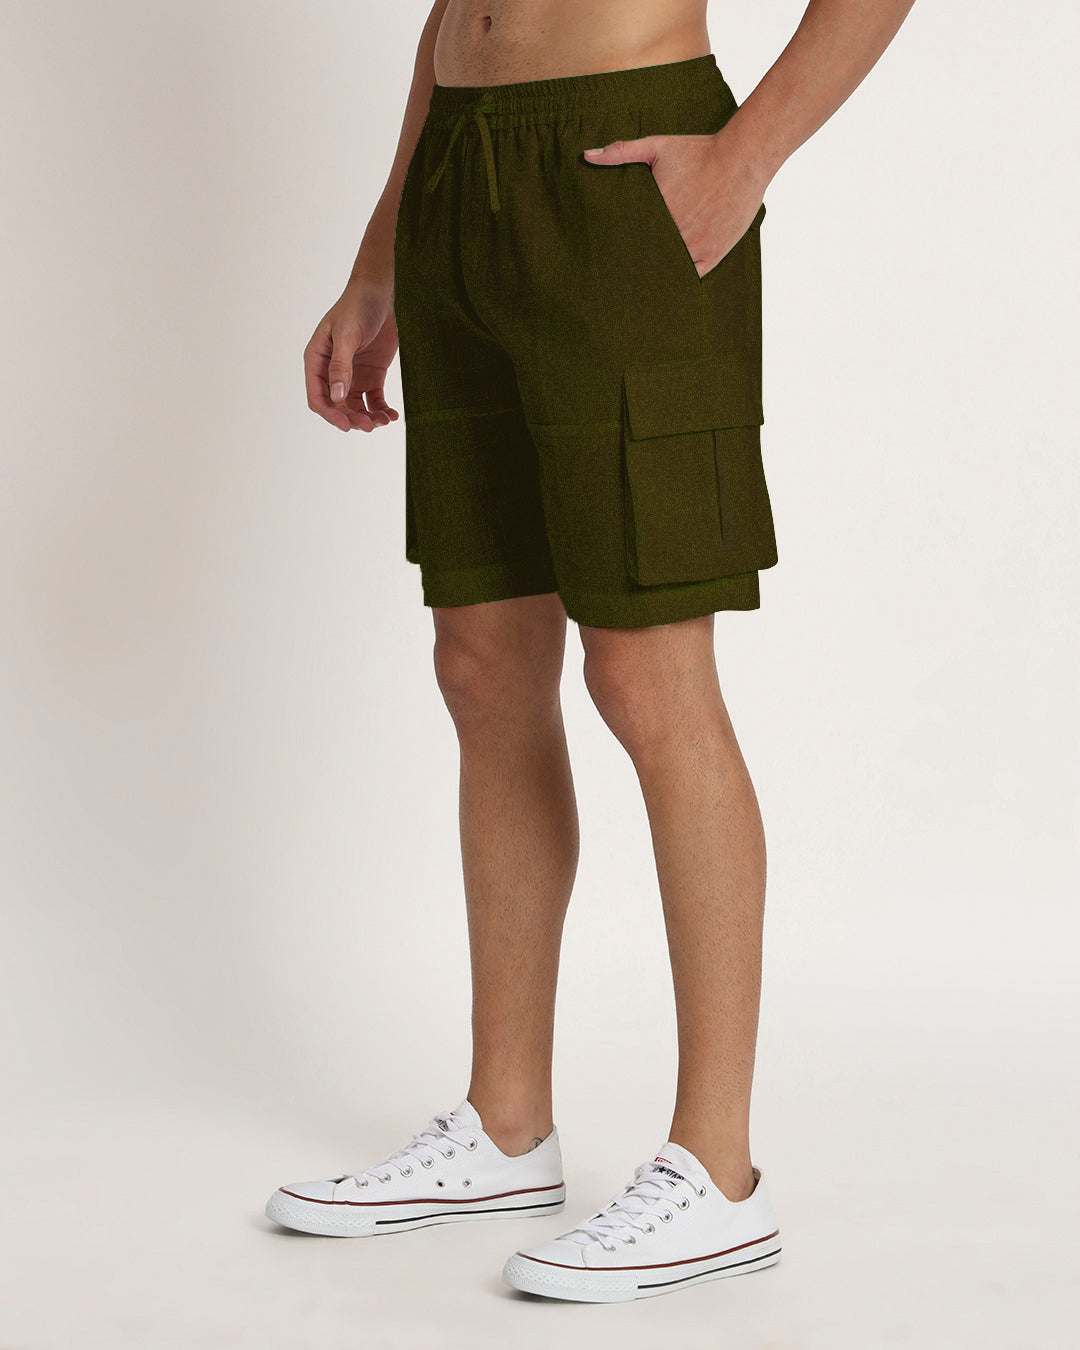 Combo : Slub Comfort Cargo Shorts Beige & Olive Green Men's Shorts